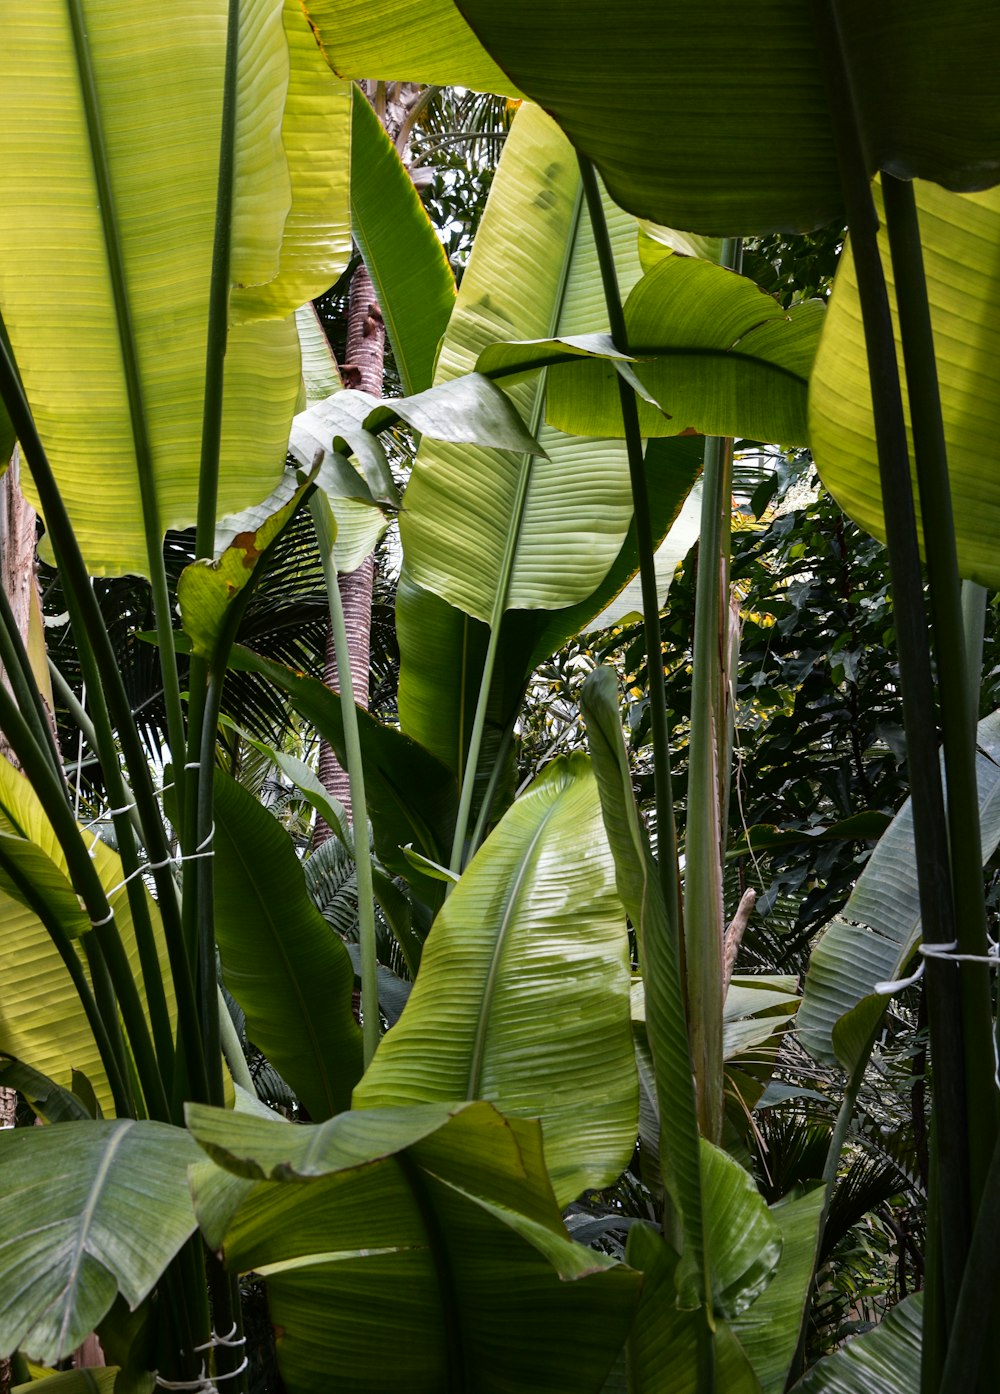 banana tree near green leaves during daytime